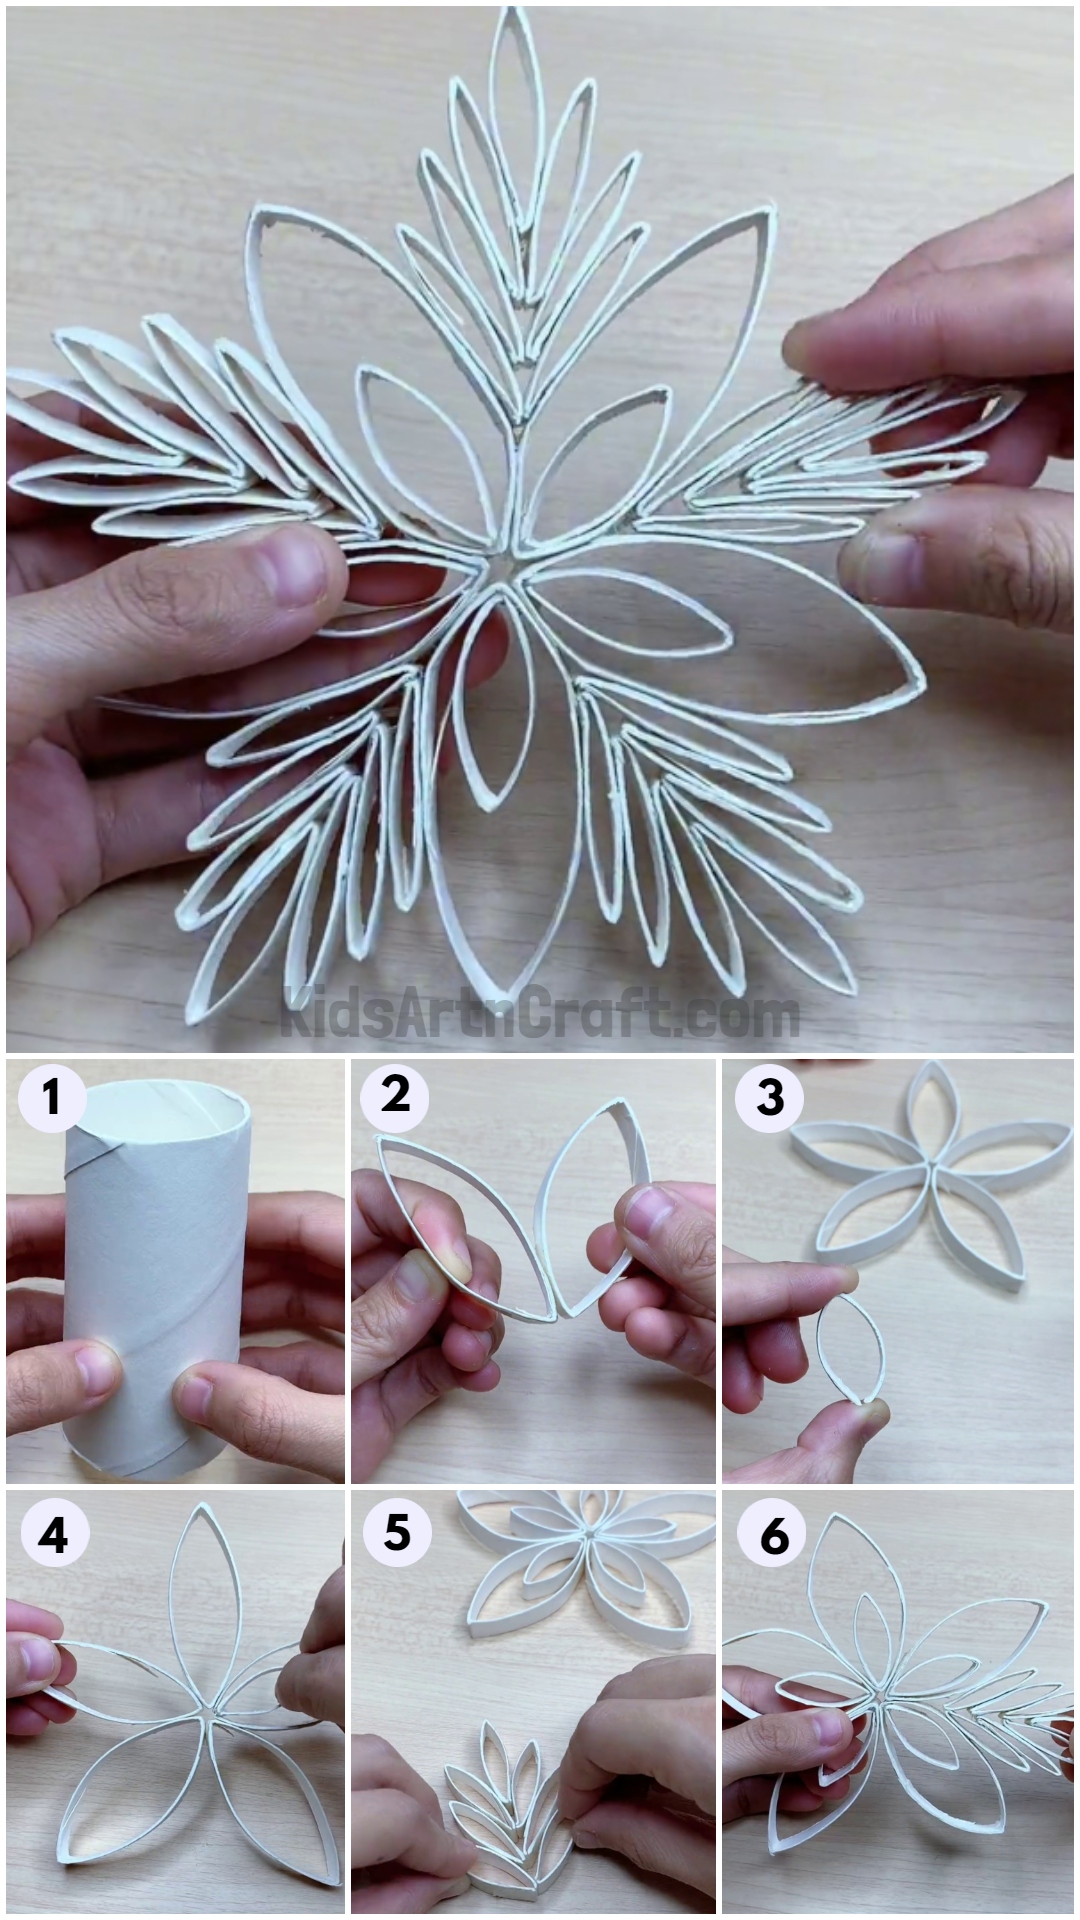 How to Make Easy Paper Snowflakes Tutorial-This tutorial will teach you how to make simple paper snowflakes